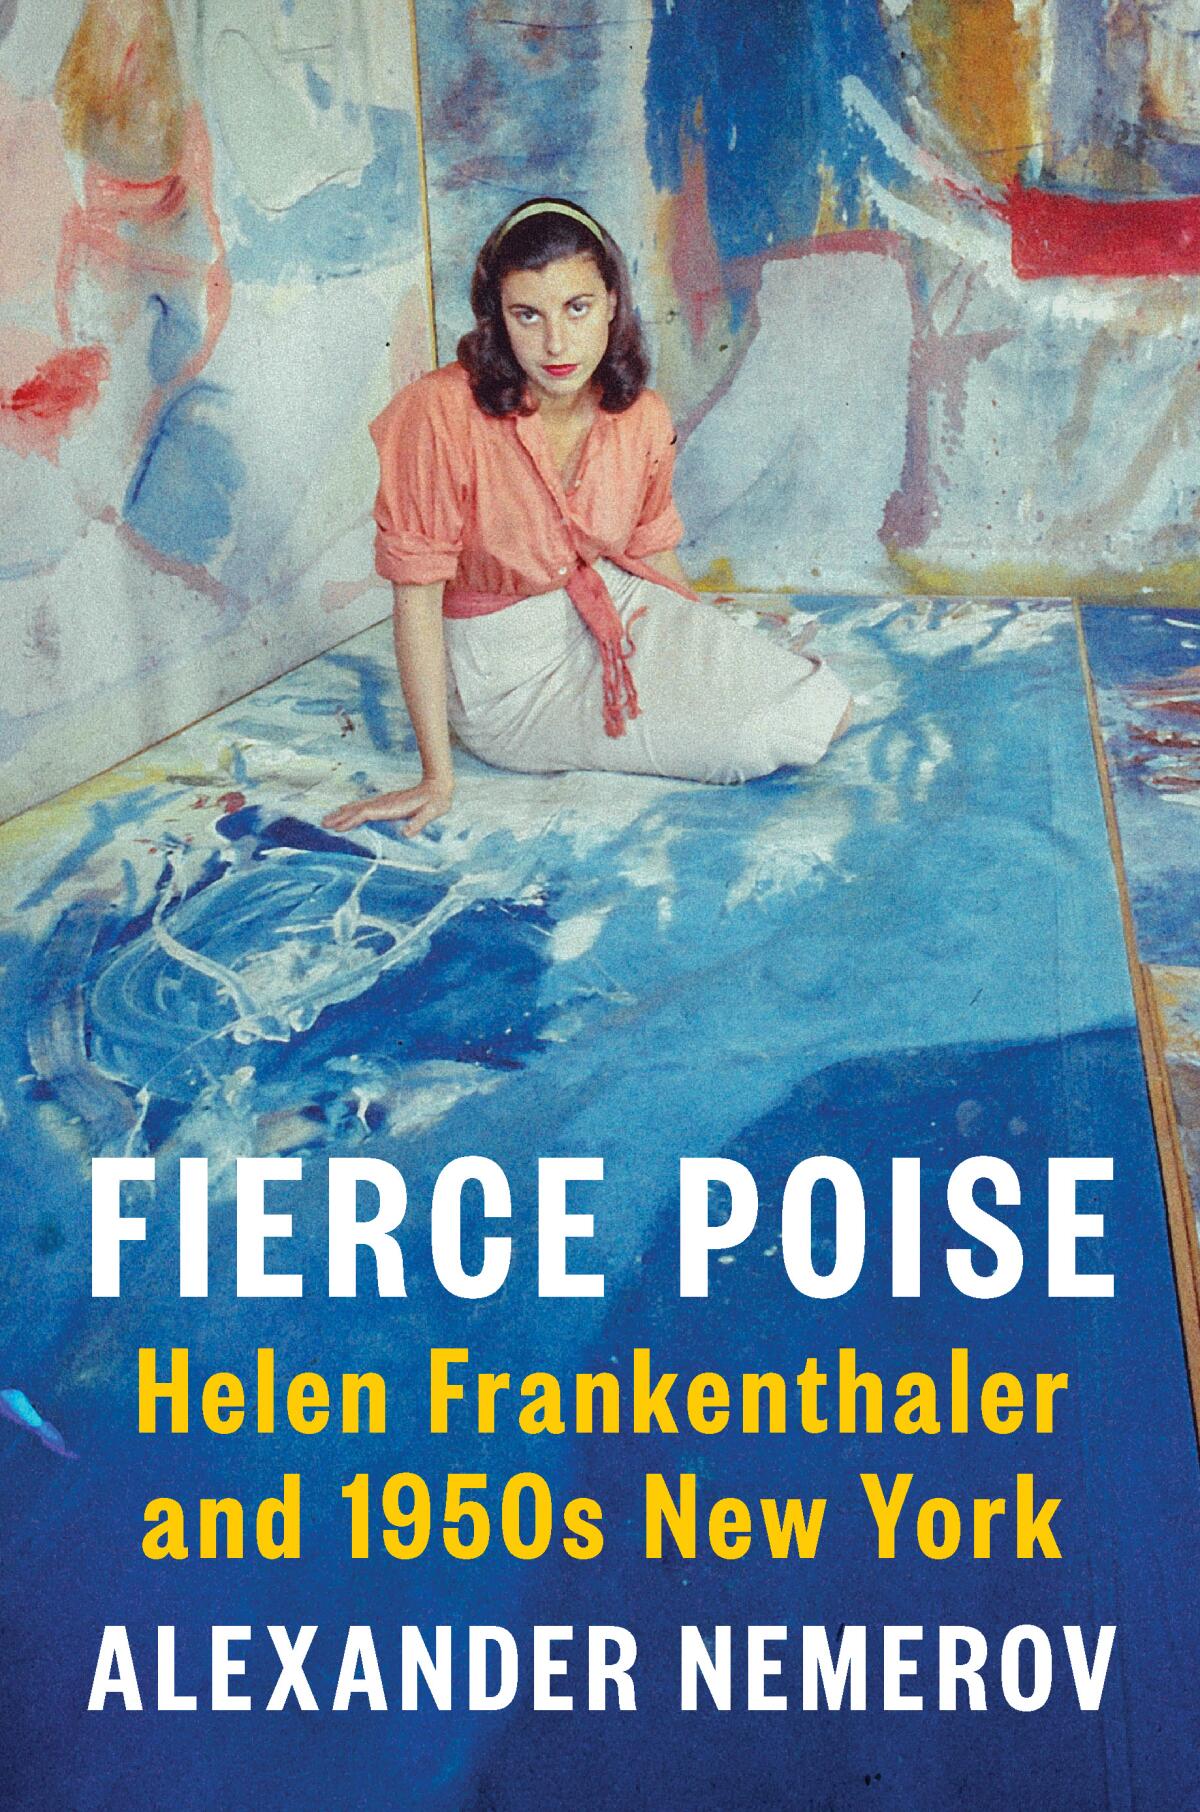 "Fierce Poise: Helen Frankethaler and 1950s New York" book cover